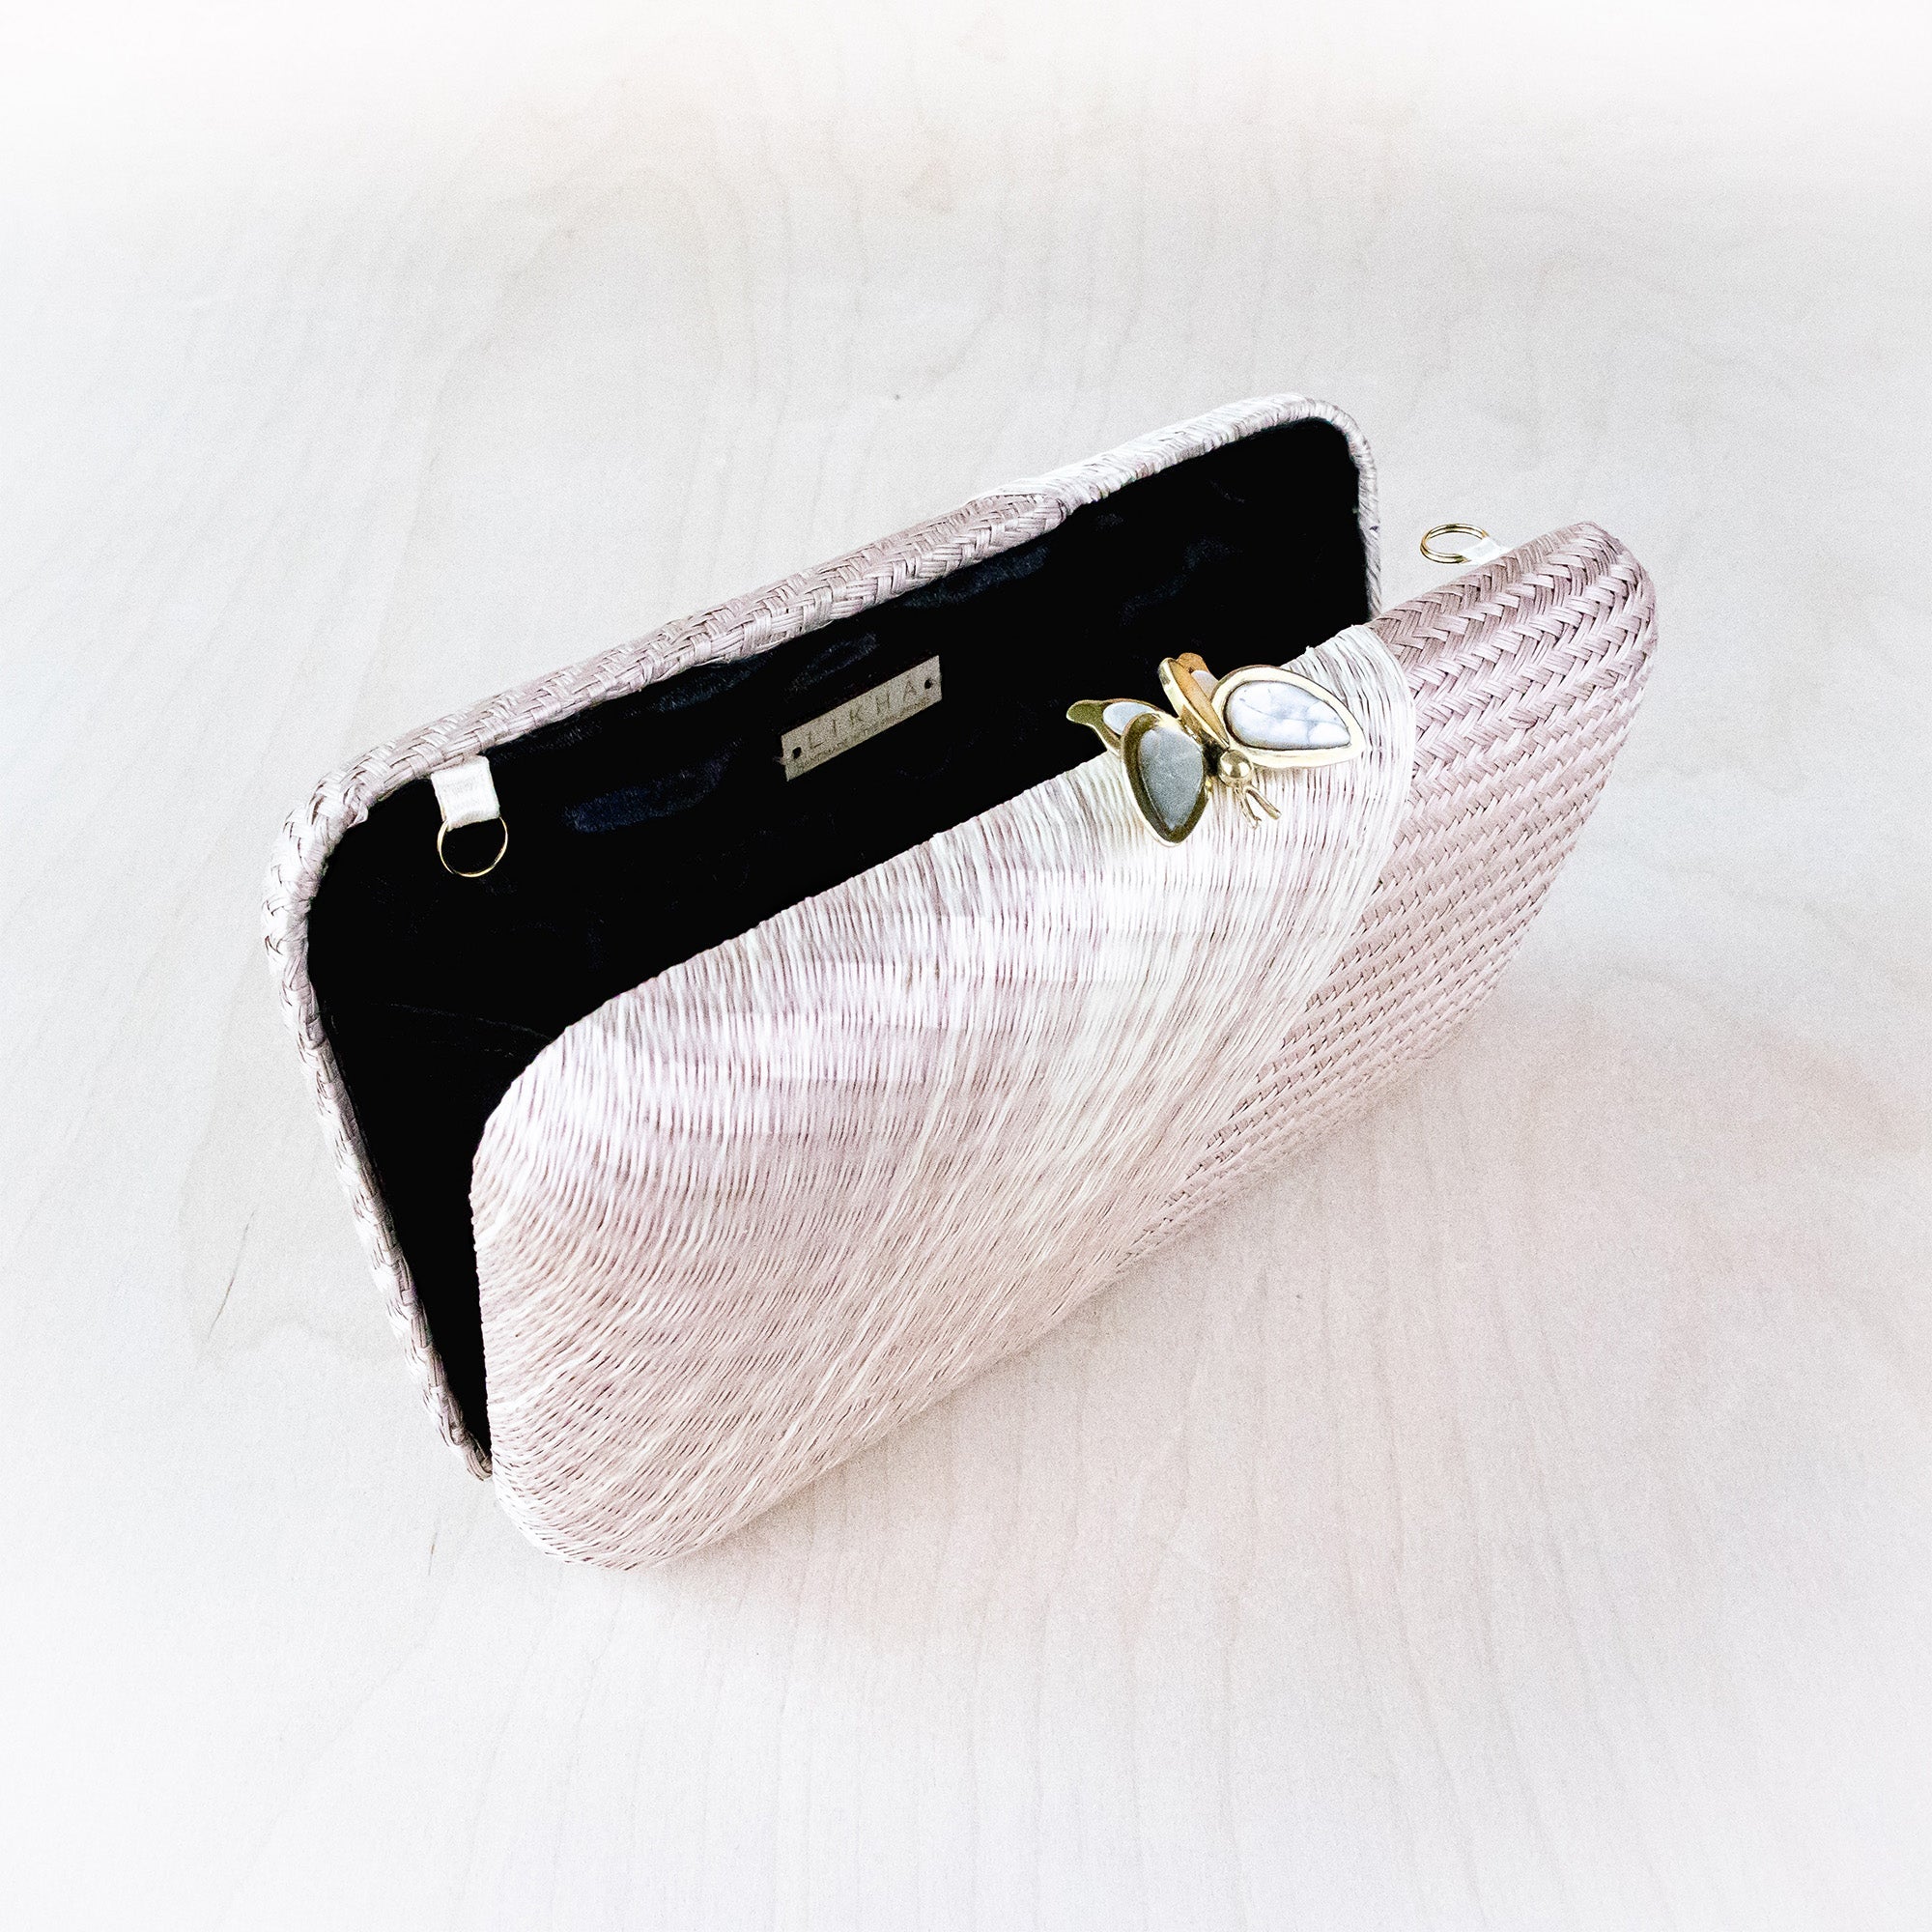 amazon.com Outrip Women's Evening Bag Clutch Purse Glitter Party Wedding  Handbag with Chain (Silver): Handbags: Amazon.com | ShopLook